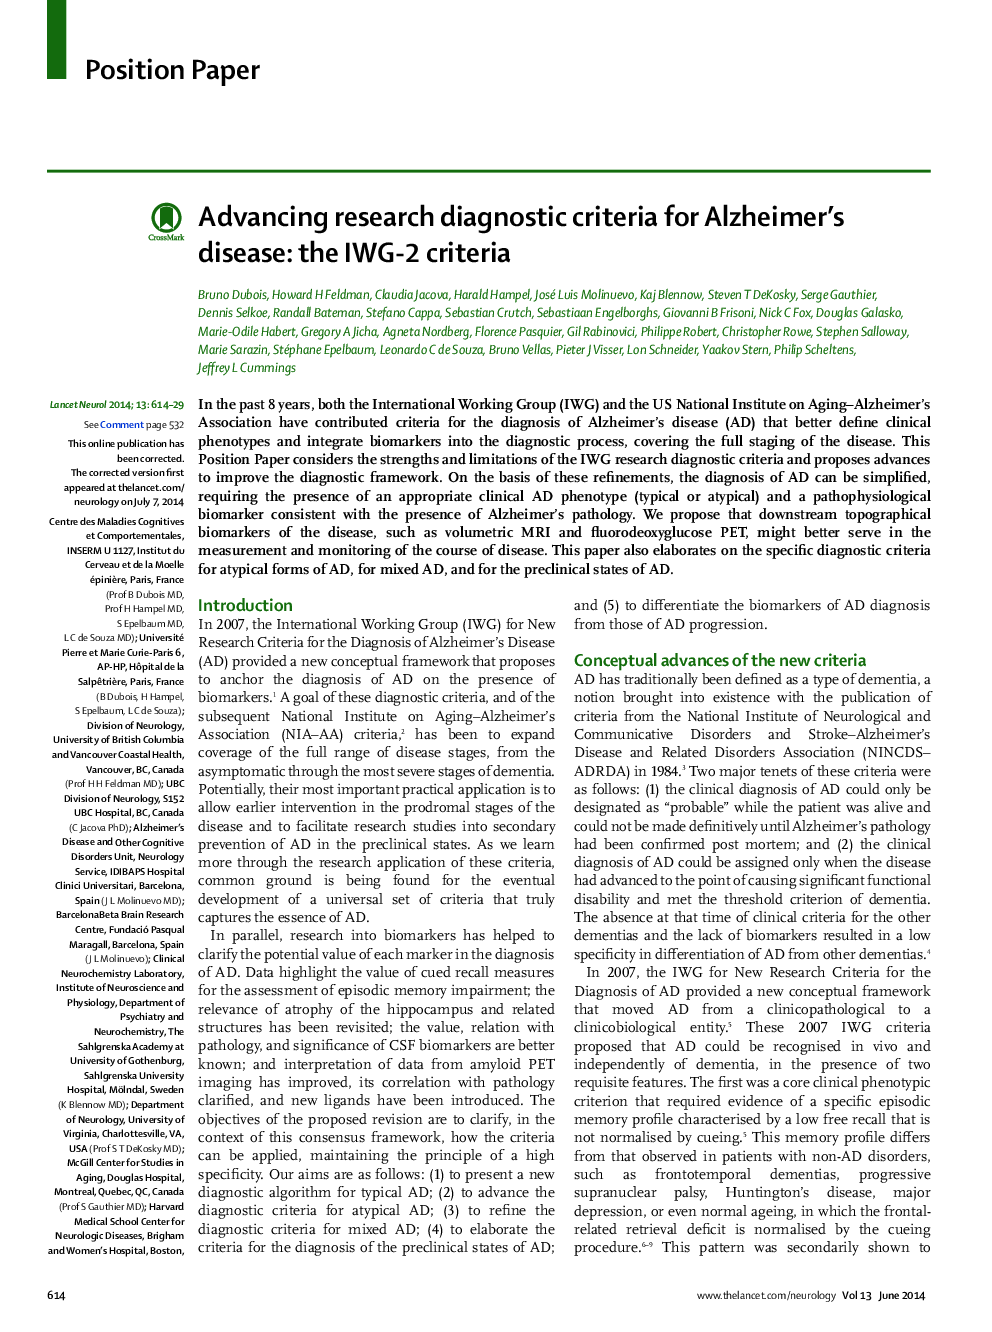 Advancing research diagnostic criteria for Alzheimer's disease: the IWG-2 criteria